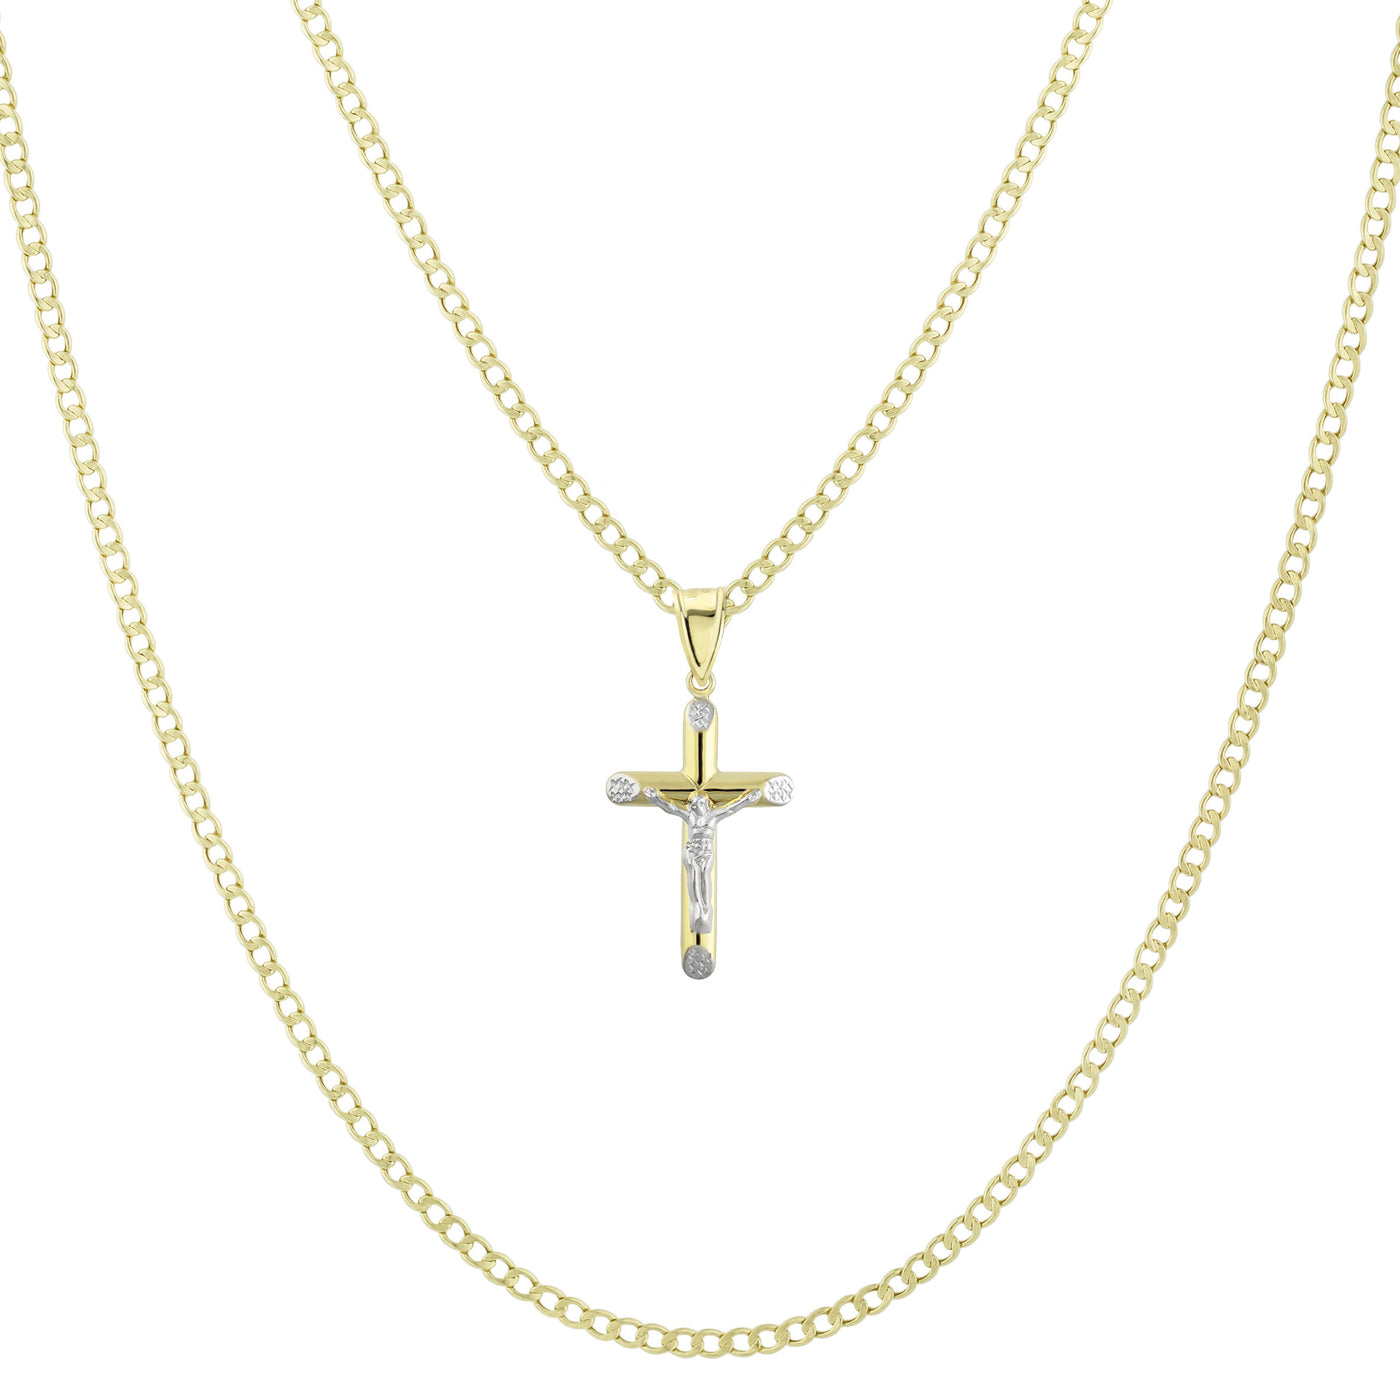 1 1/4" Jesus Cross Crucifix Two-Tone Pendant & Chain Necklace Set 10K Yellow White Gold